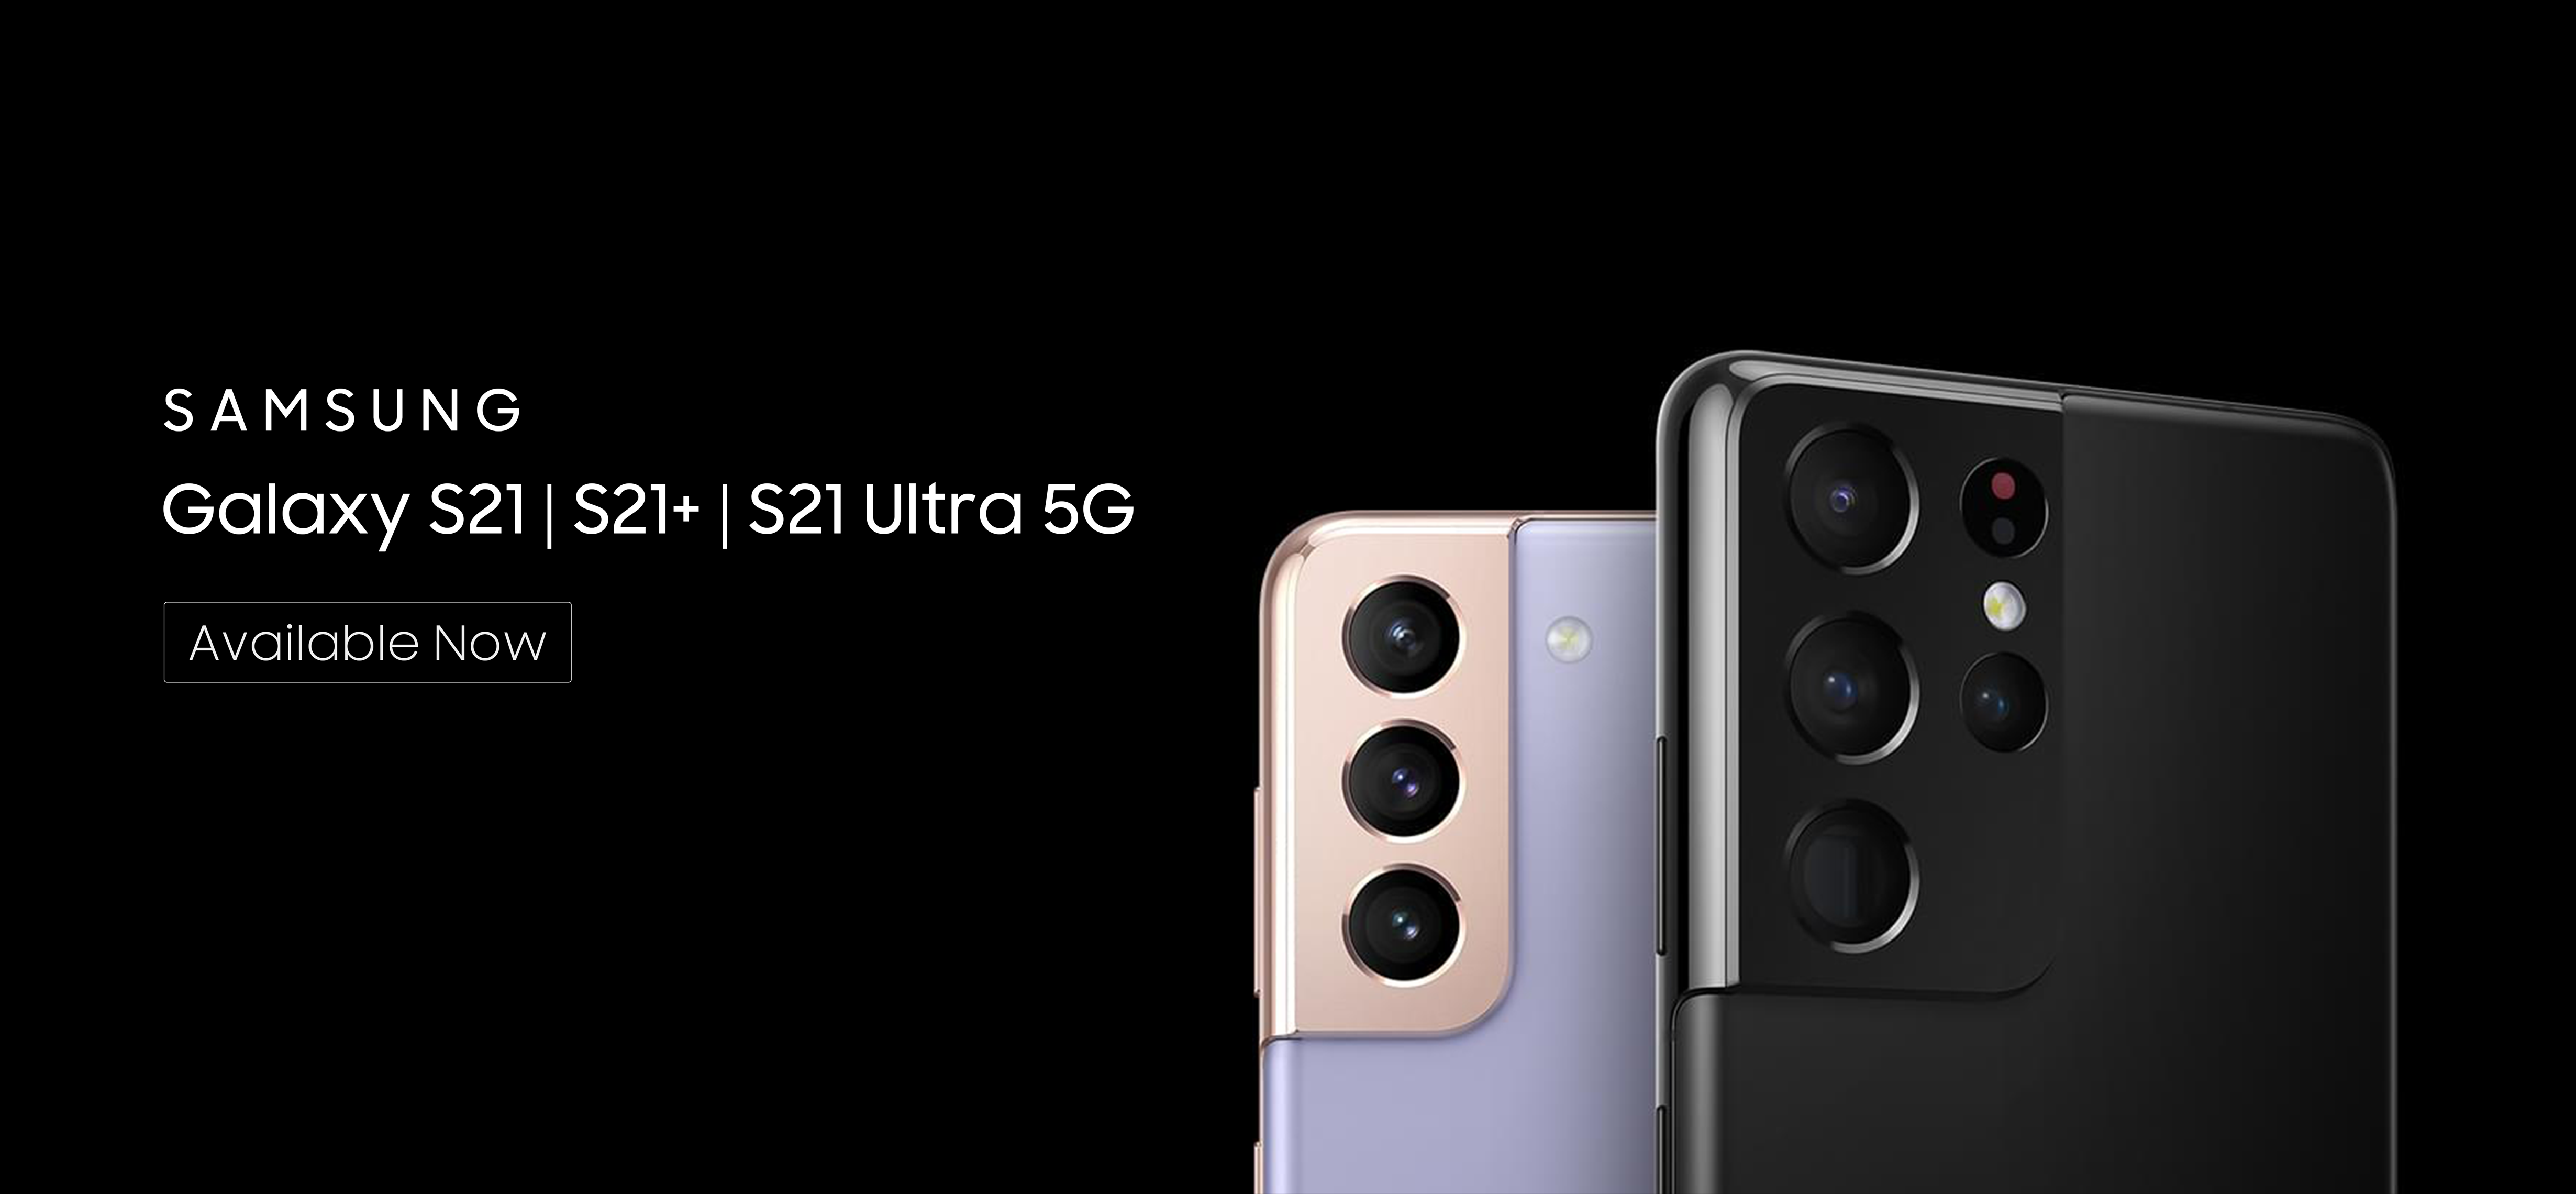 Galaxy S21 | S21+ | S21 Ultra 5G